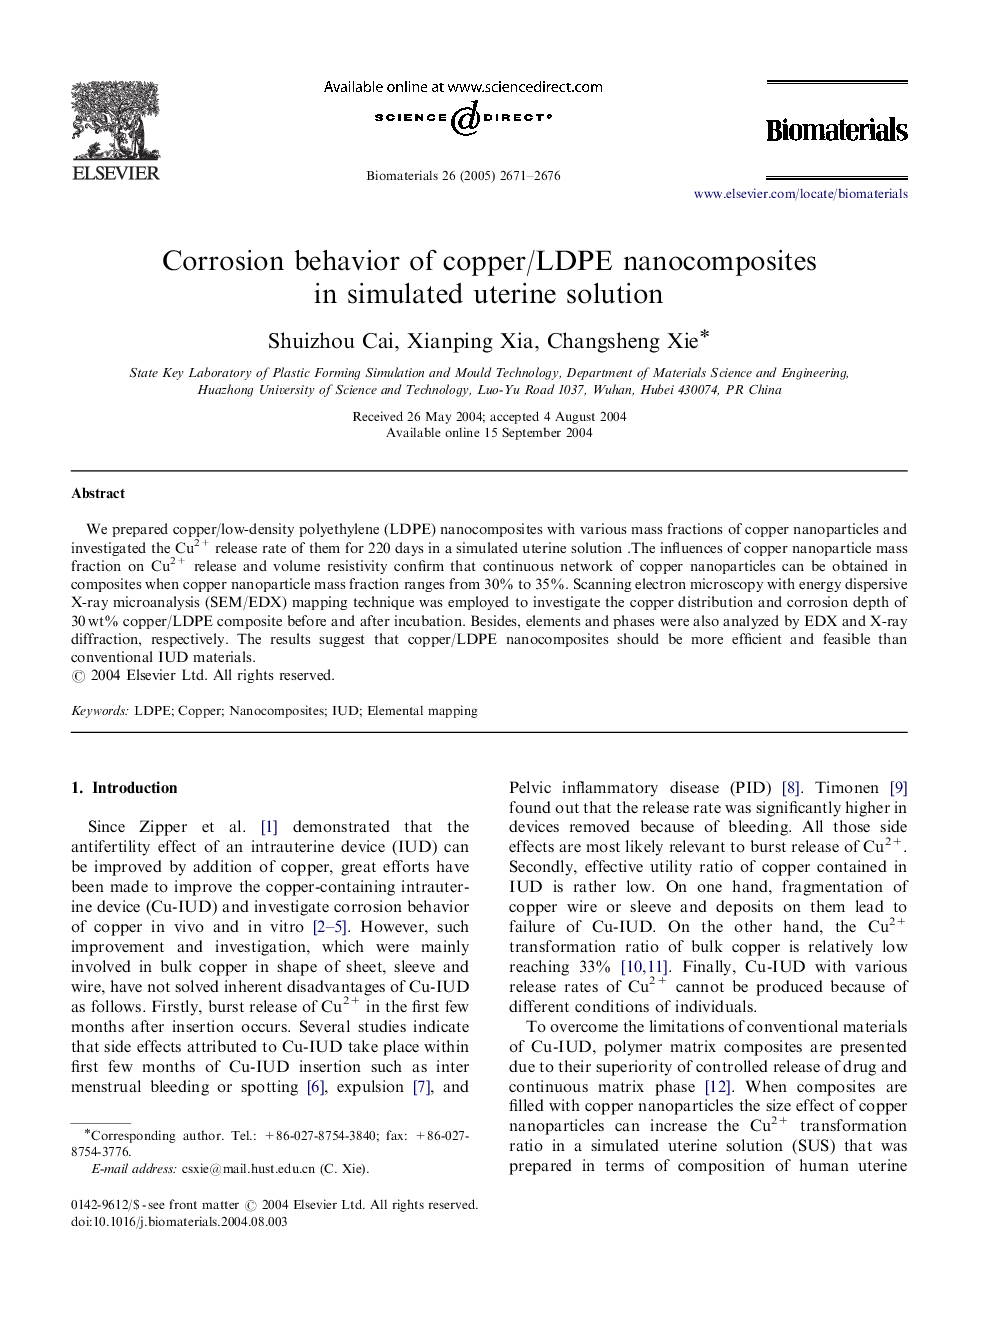 Corrosion behavior of copper/LDPE nanocomposites in simulated uterine solution